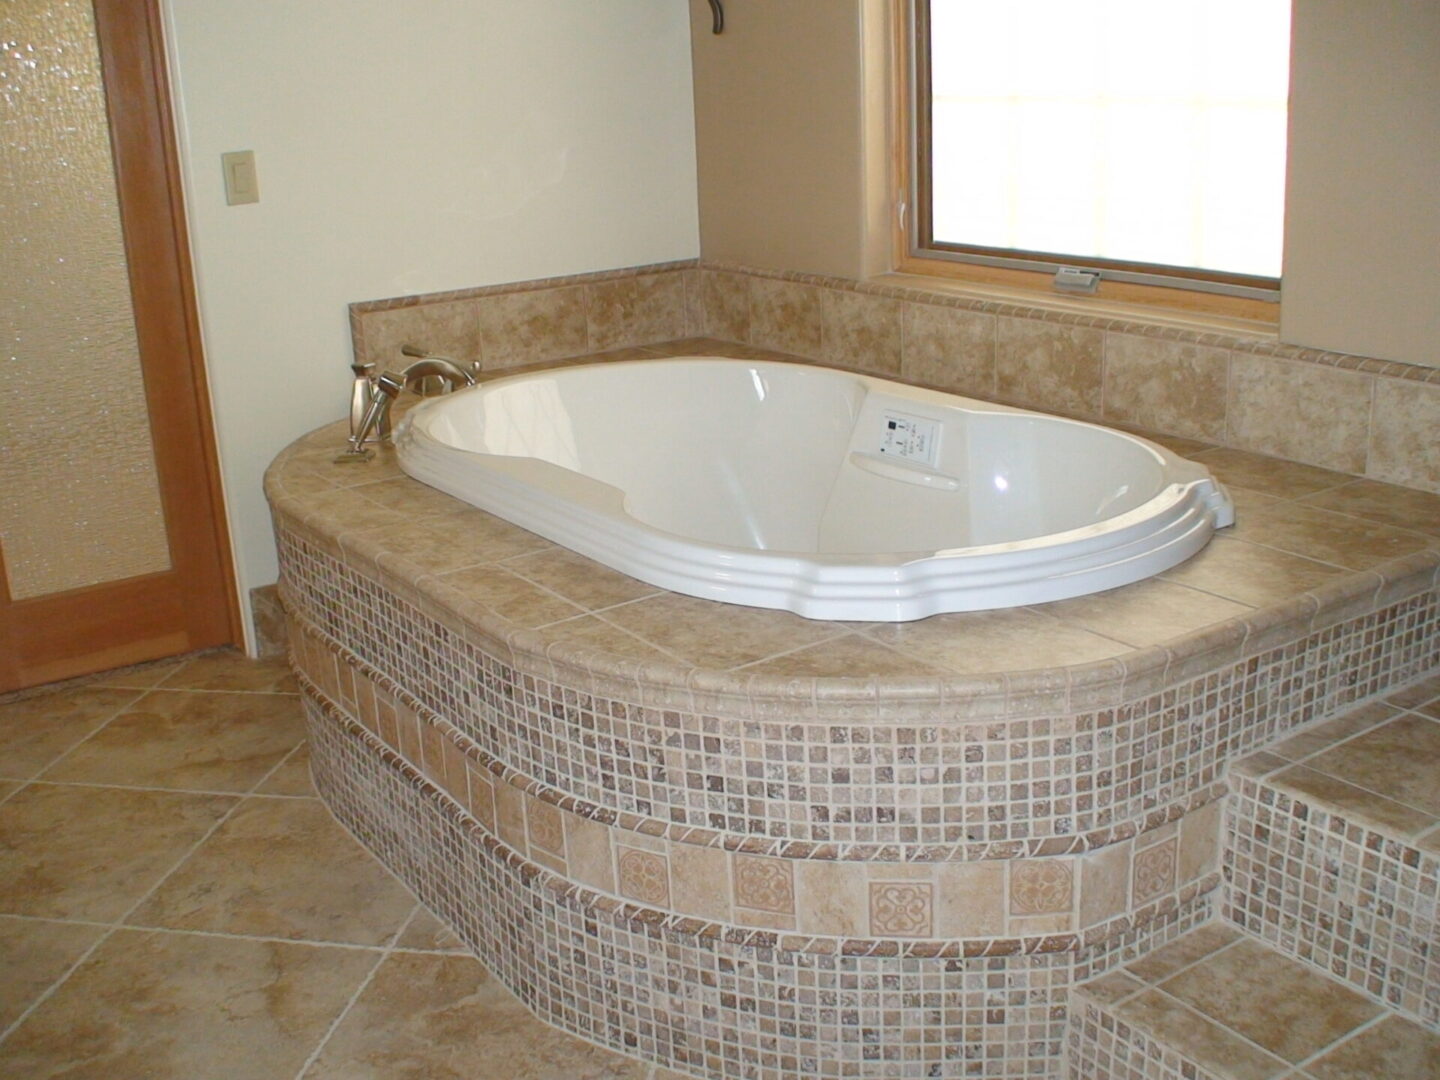 Closeup view of the bath tub on granite stone